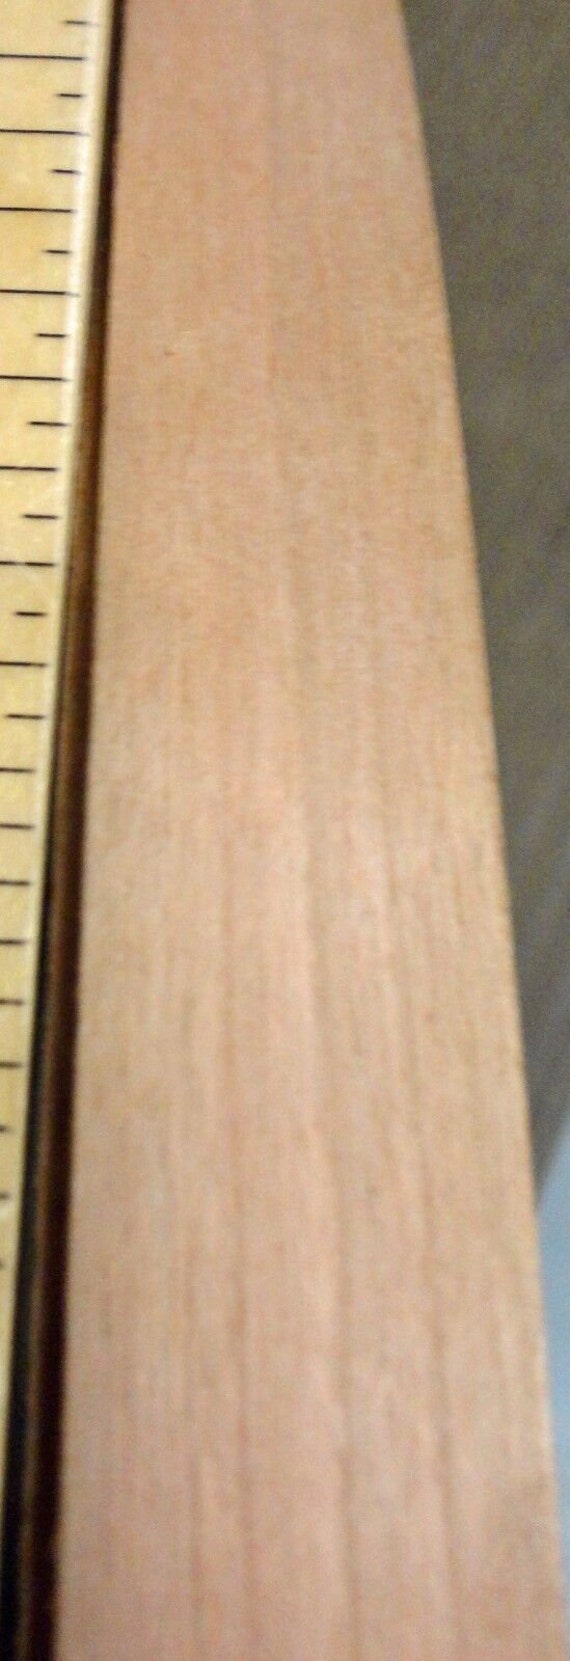 Cherry wood veneer edgebanding  1/2" x 120" with preglued hot melt adhesive 